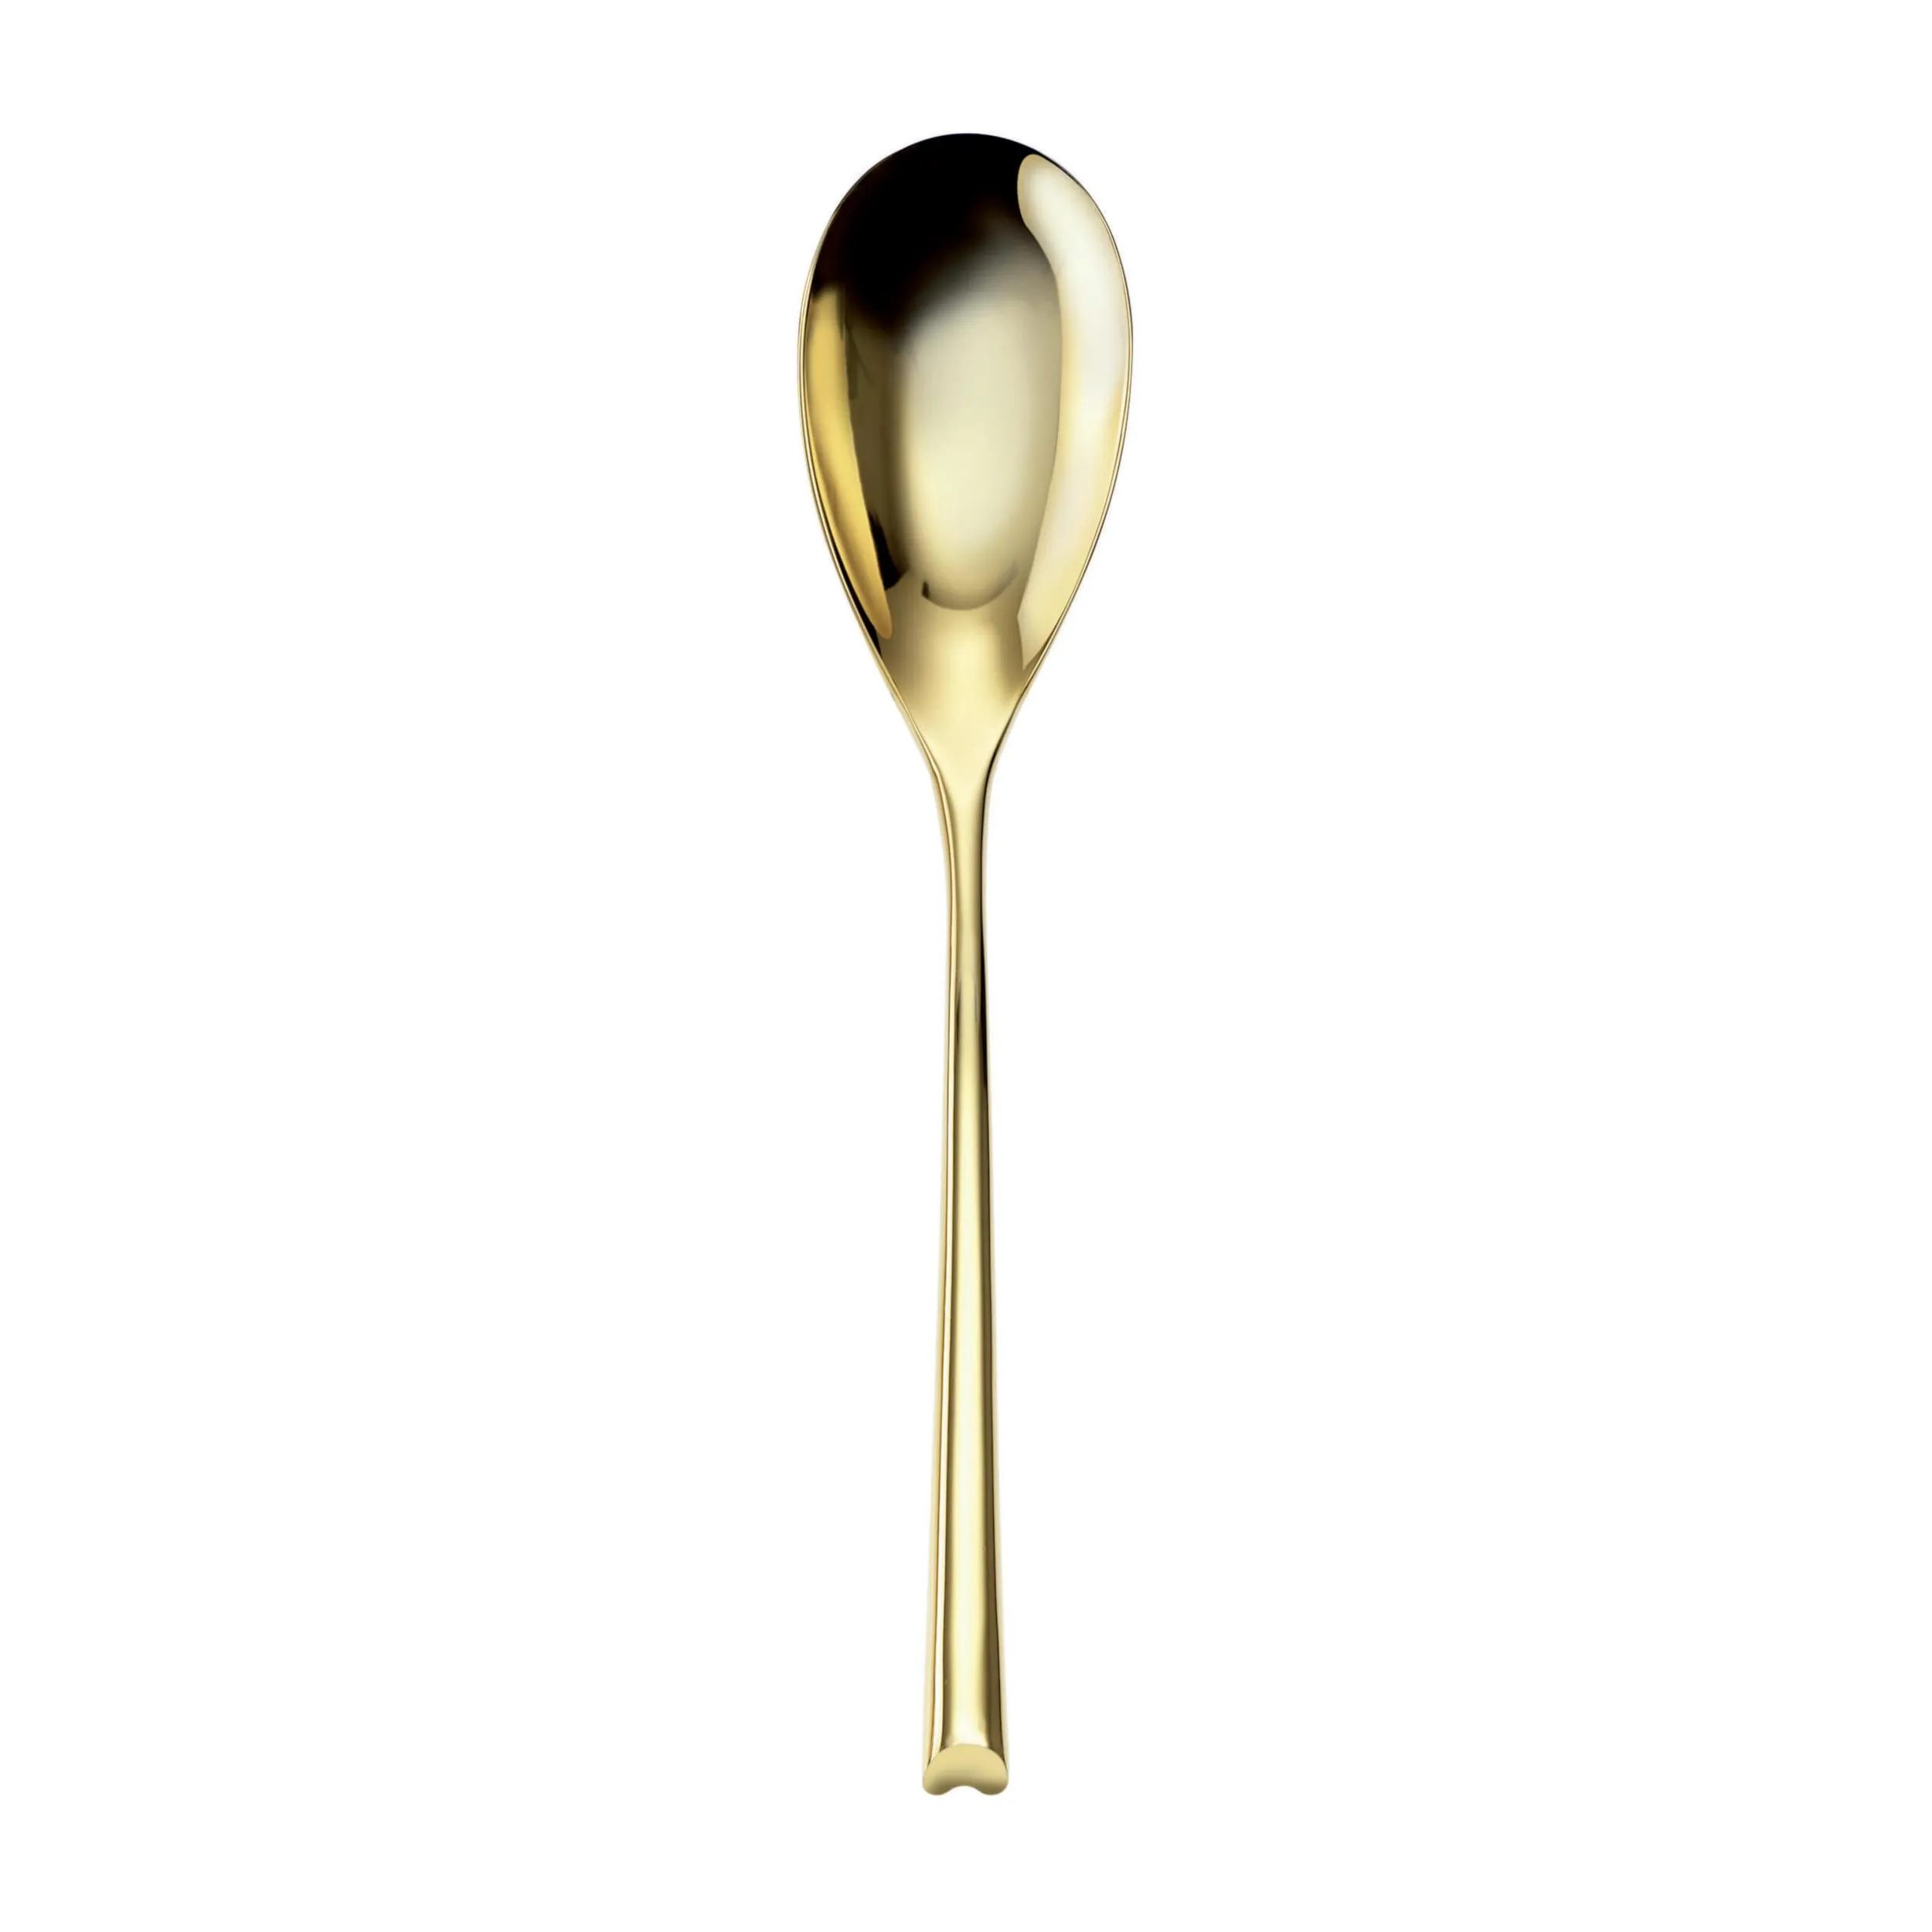 Cucchiaio da Tavola in acciaio 18.10 H-Art Finitura PVD GOLD Set 6 pezzi lunghezza 20,90 mm Sambonet Oro